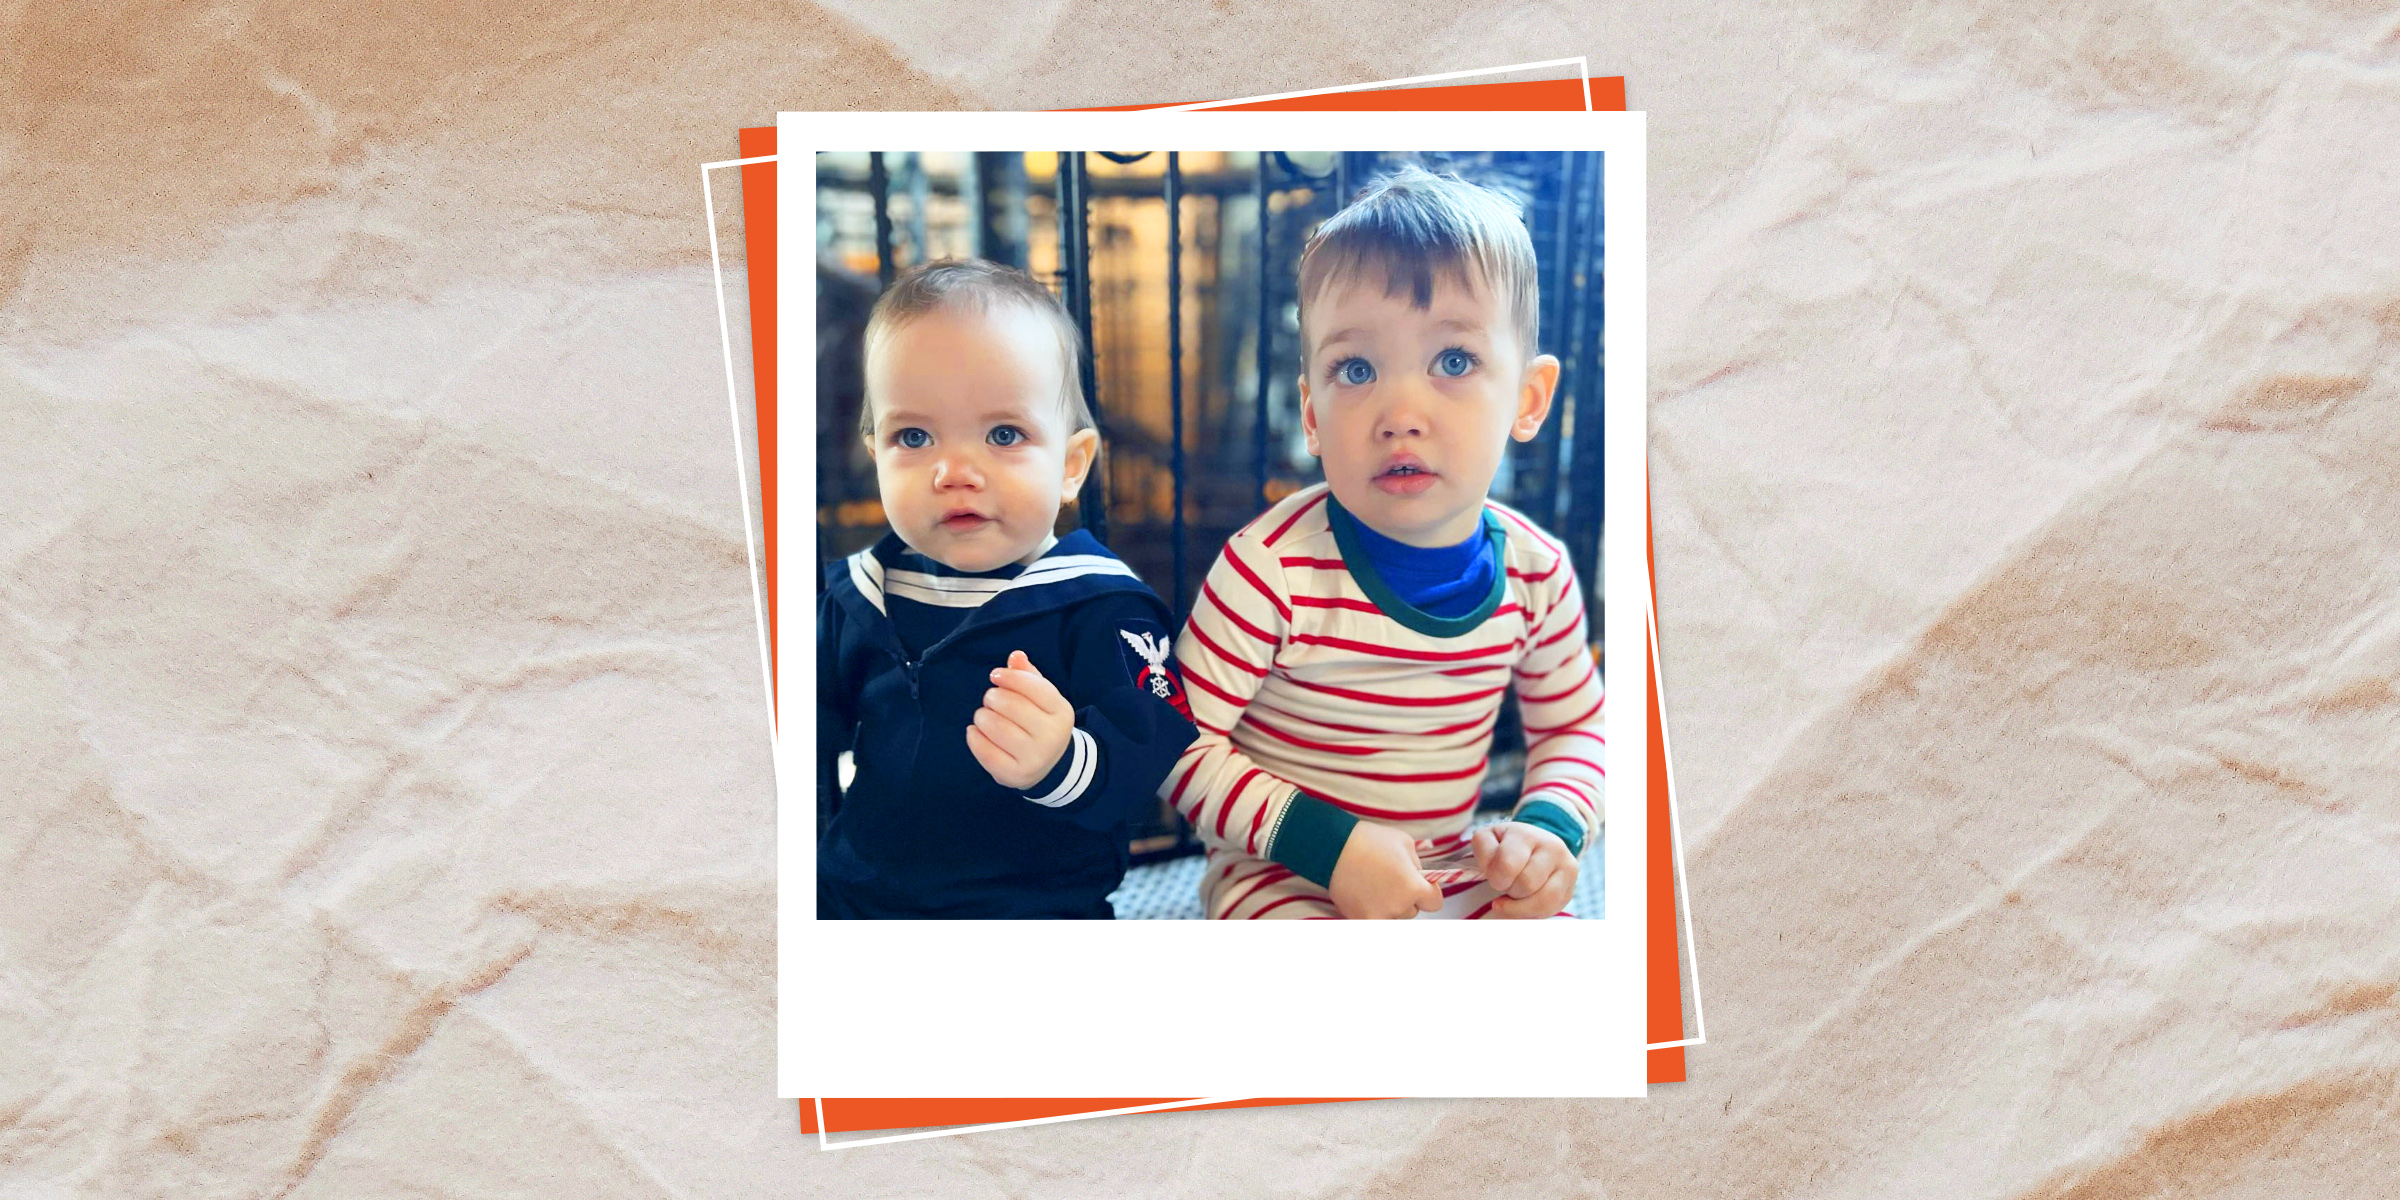 Anderson Cooper enfants Wyatt et Sebastian | Source : Instagram.om/andersoncooper